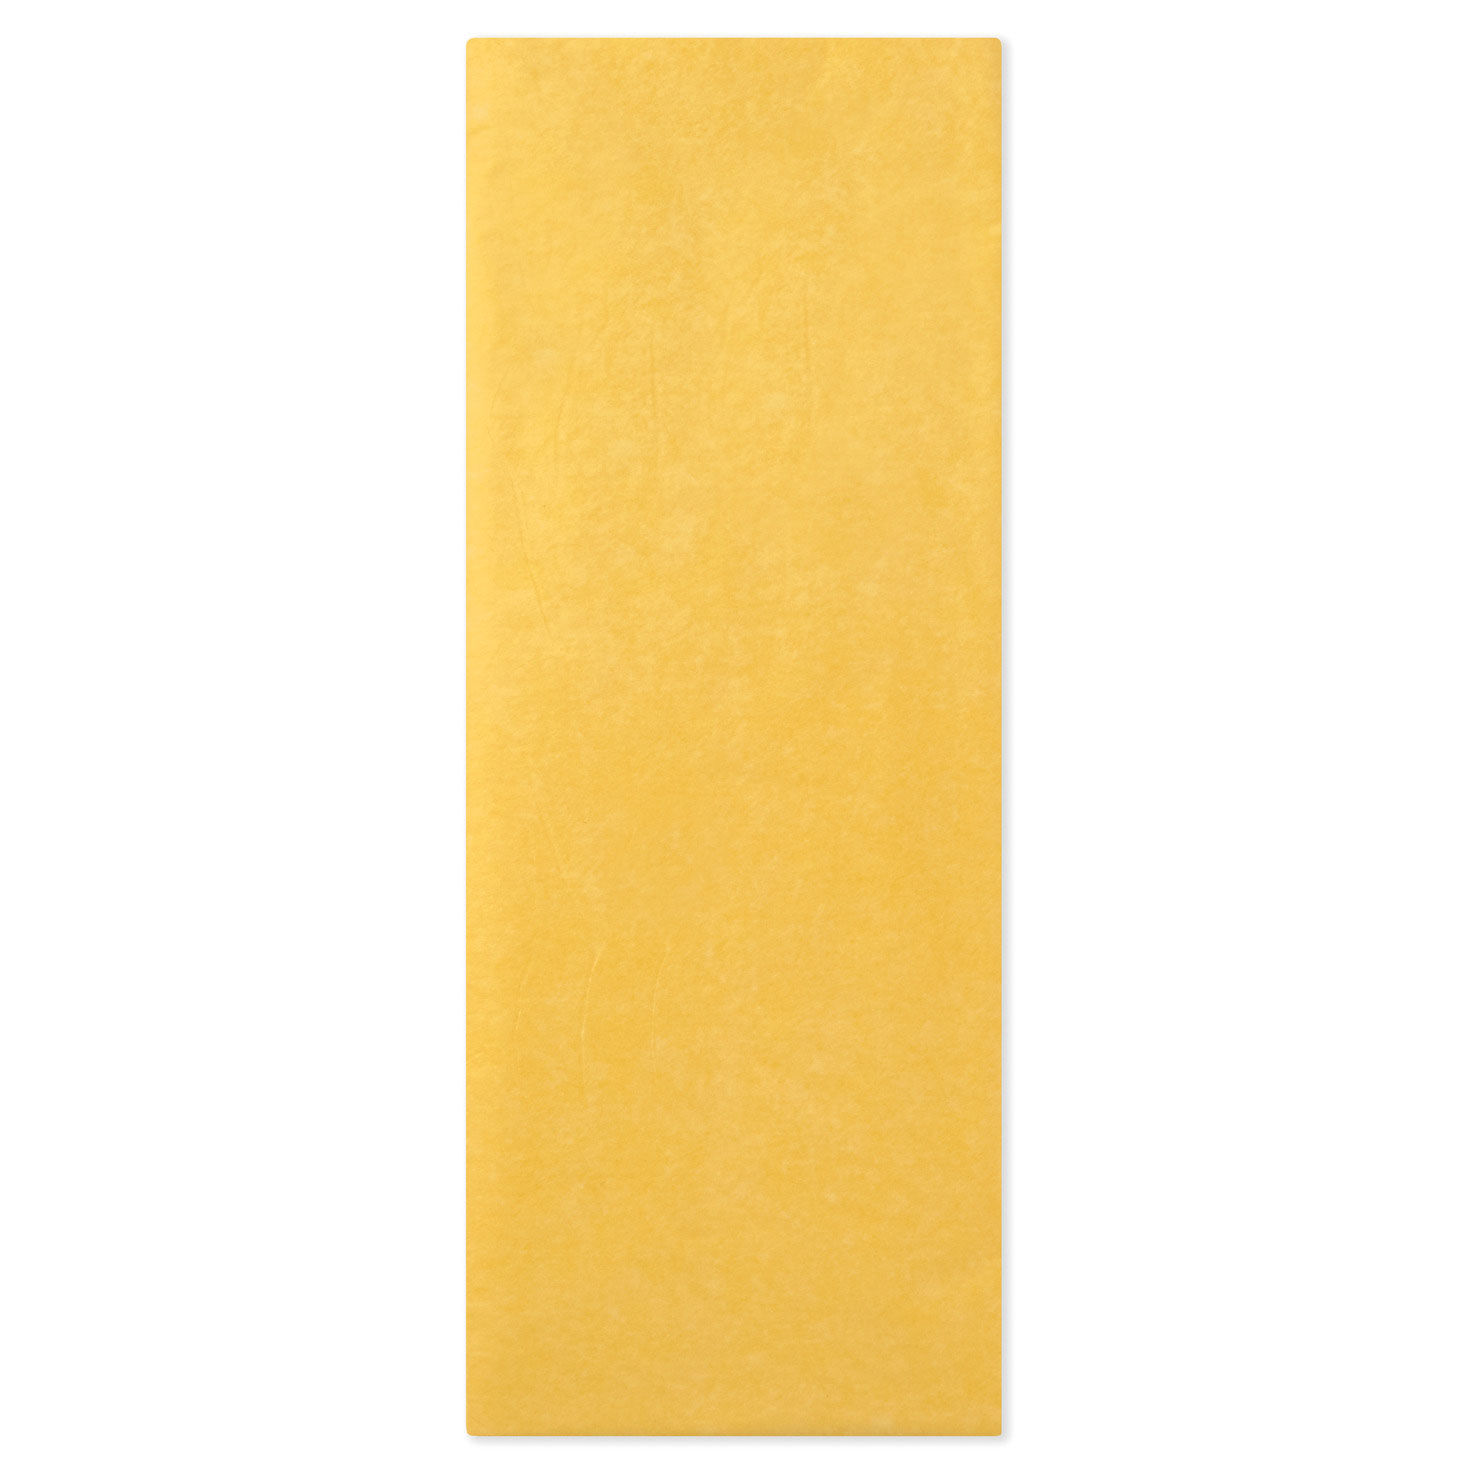 Buttercup Yellow Tissue Paper, 8 sheets - Tissue - Hallmark